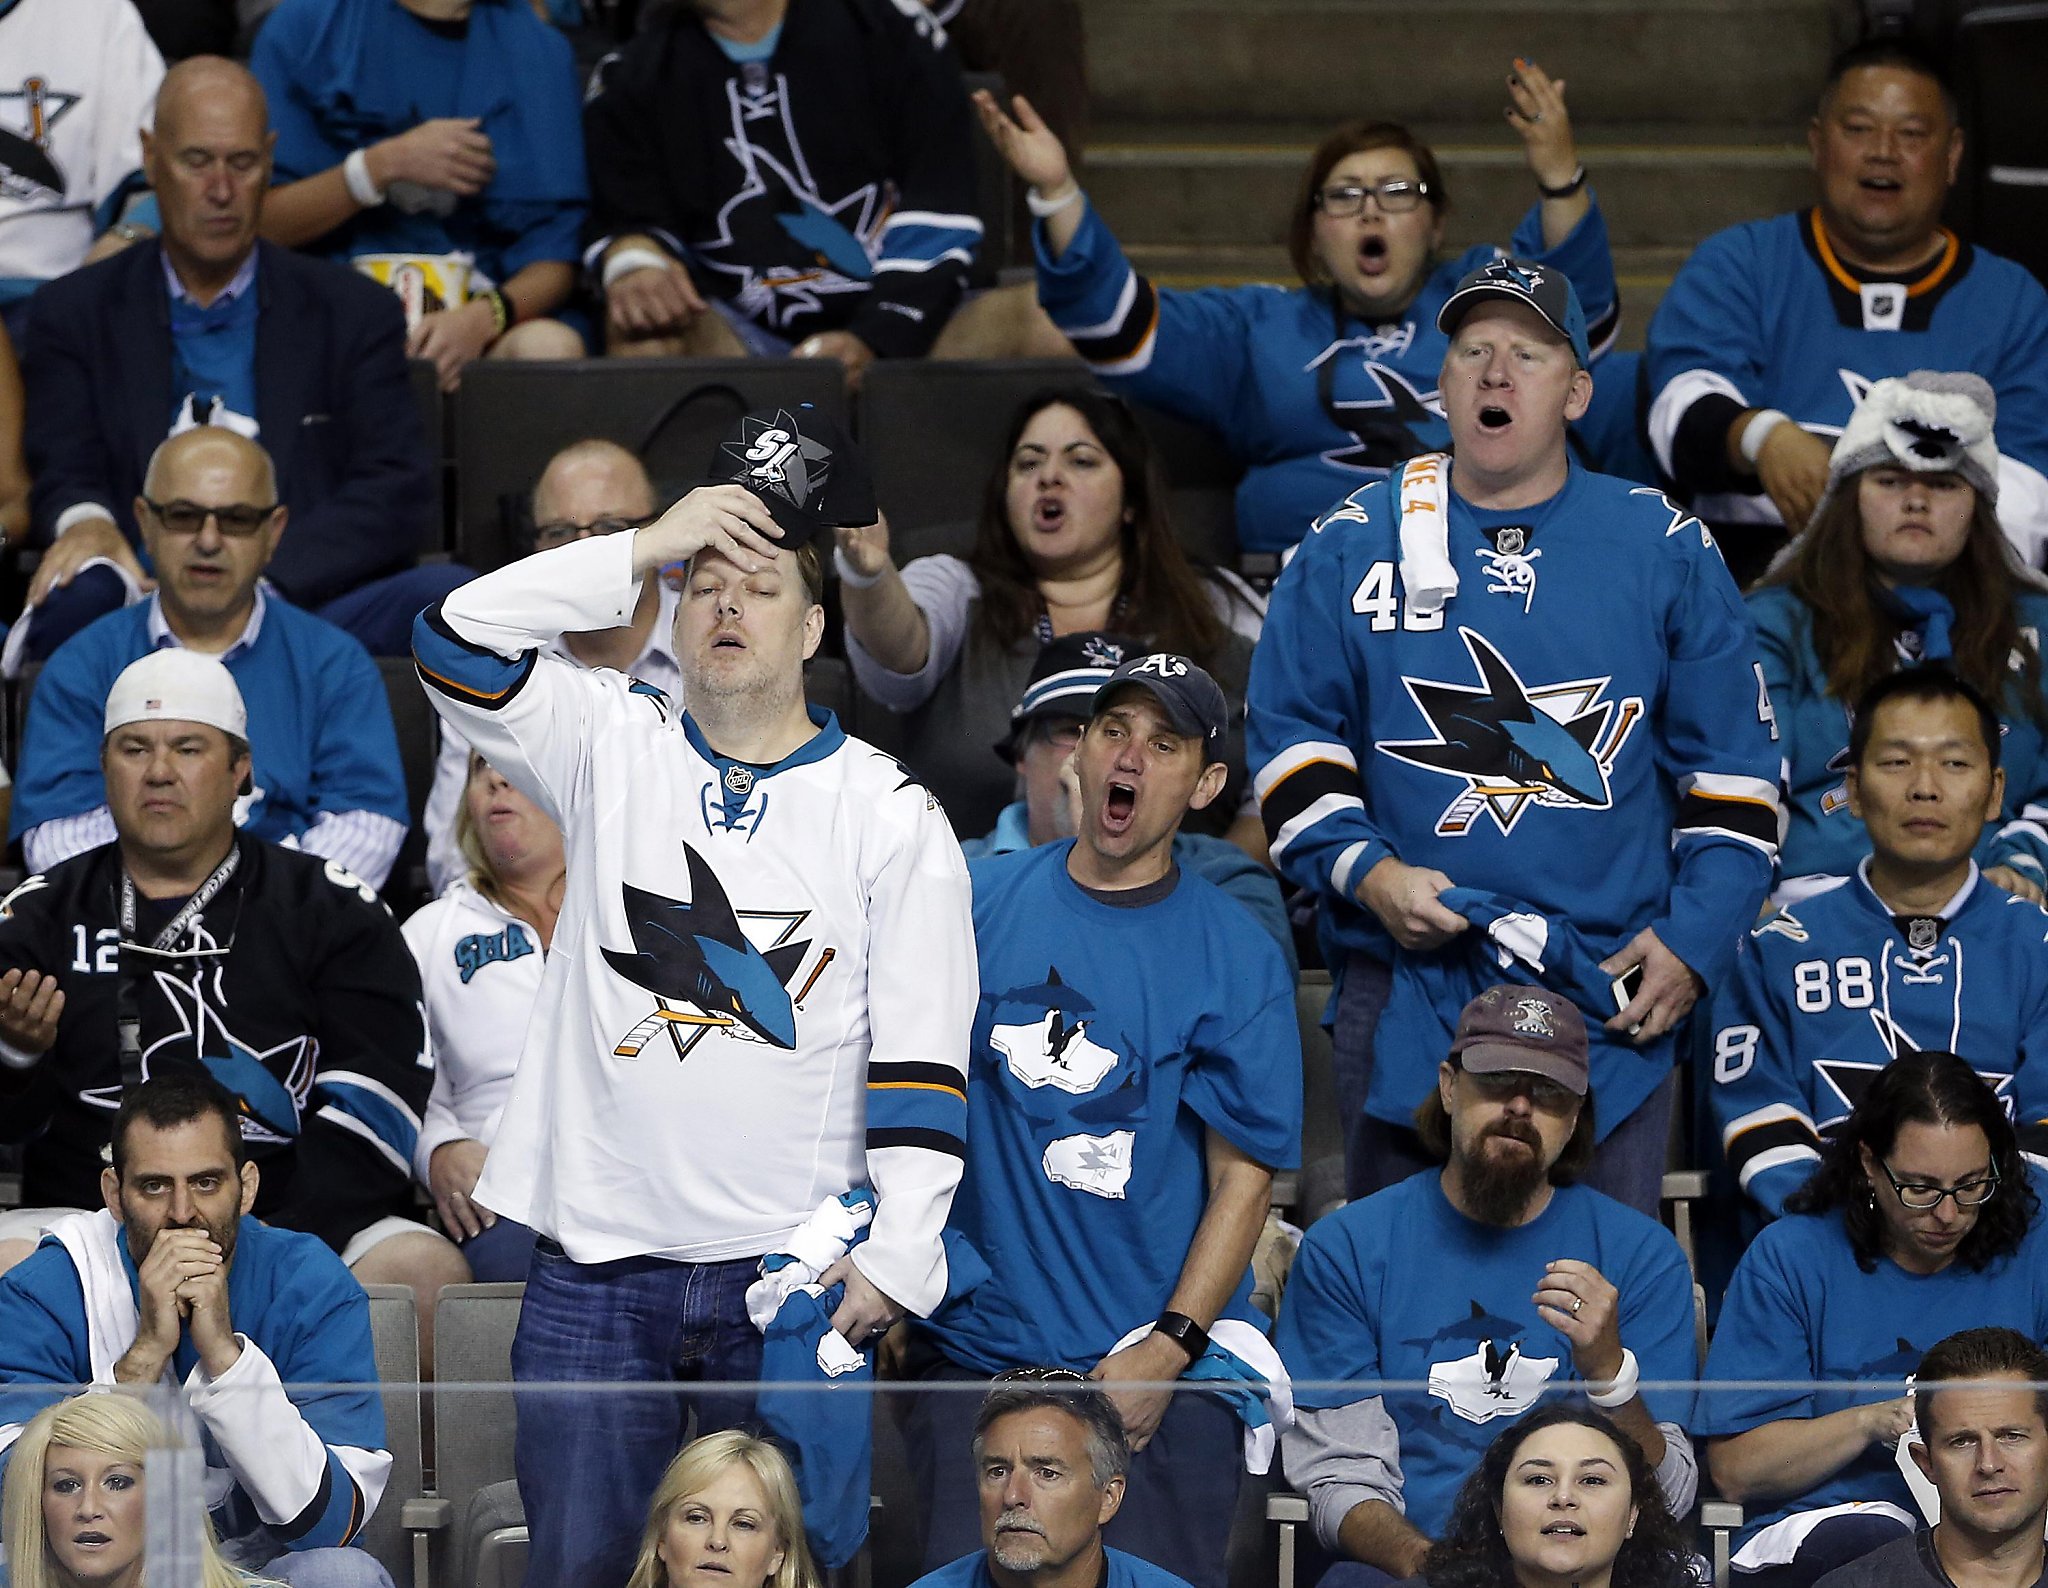 Stanley Cup Final: Joonas Donskoi, Sharks top Penguins - Sports Illustrated